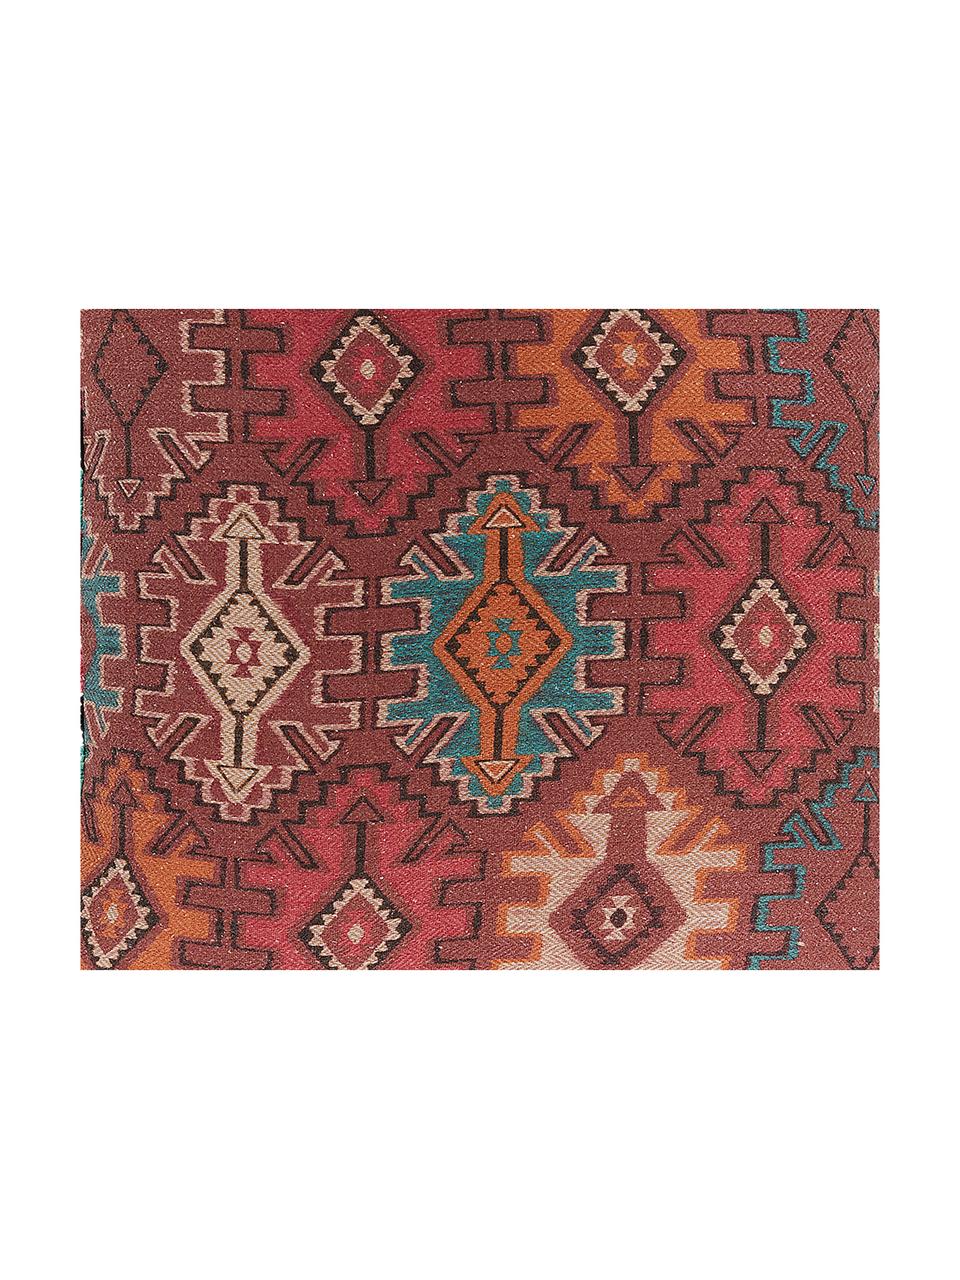 Dubbelzijdige kussenhoes World, Katoen, Roodtinten, multicolour, B 45 x L 45 cm